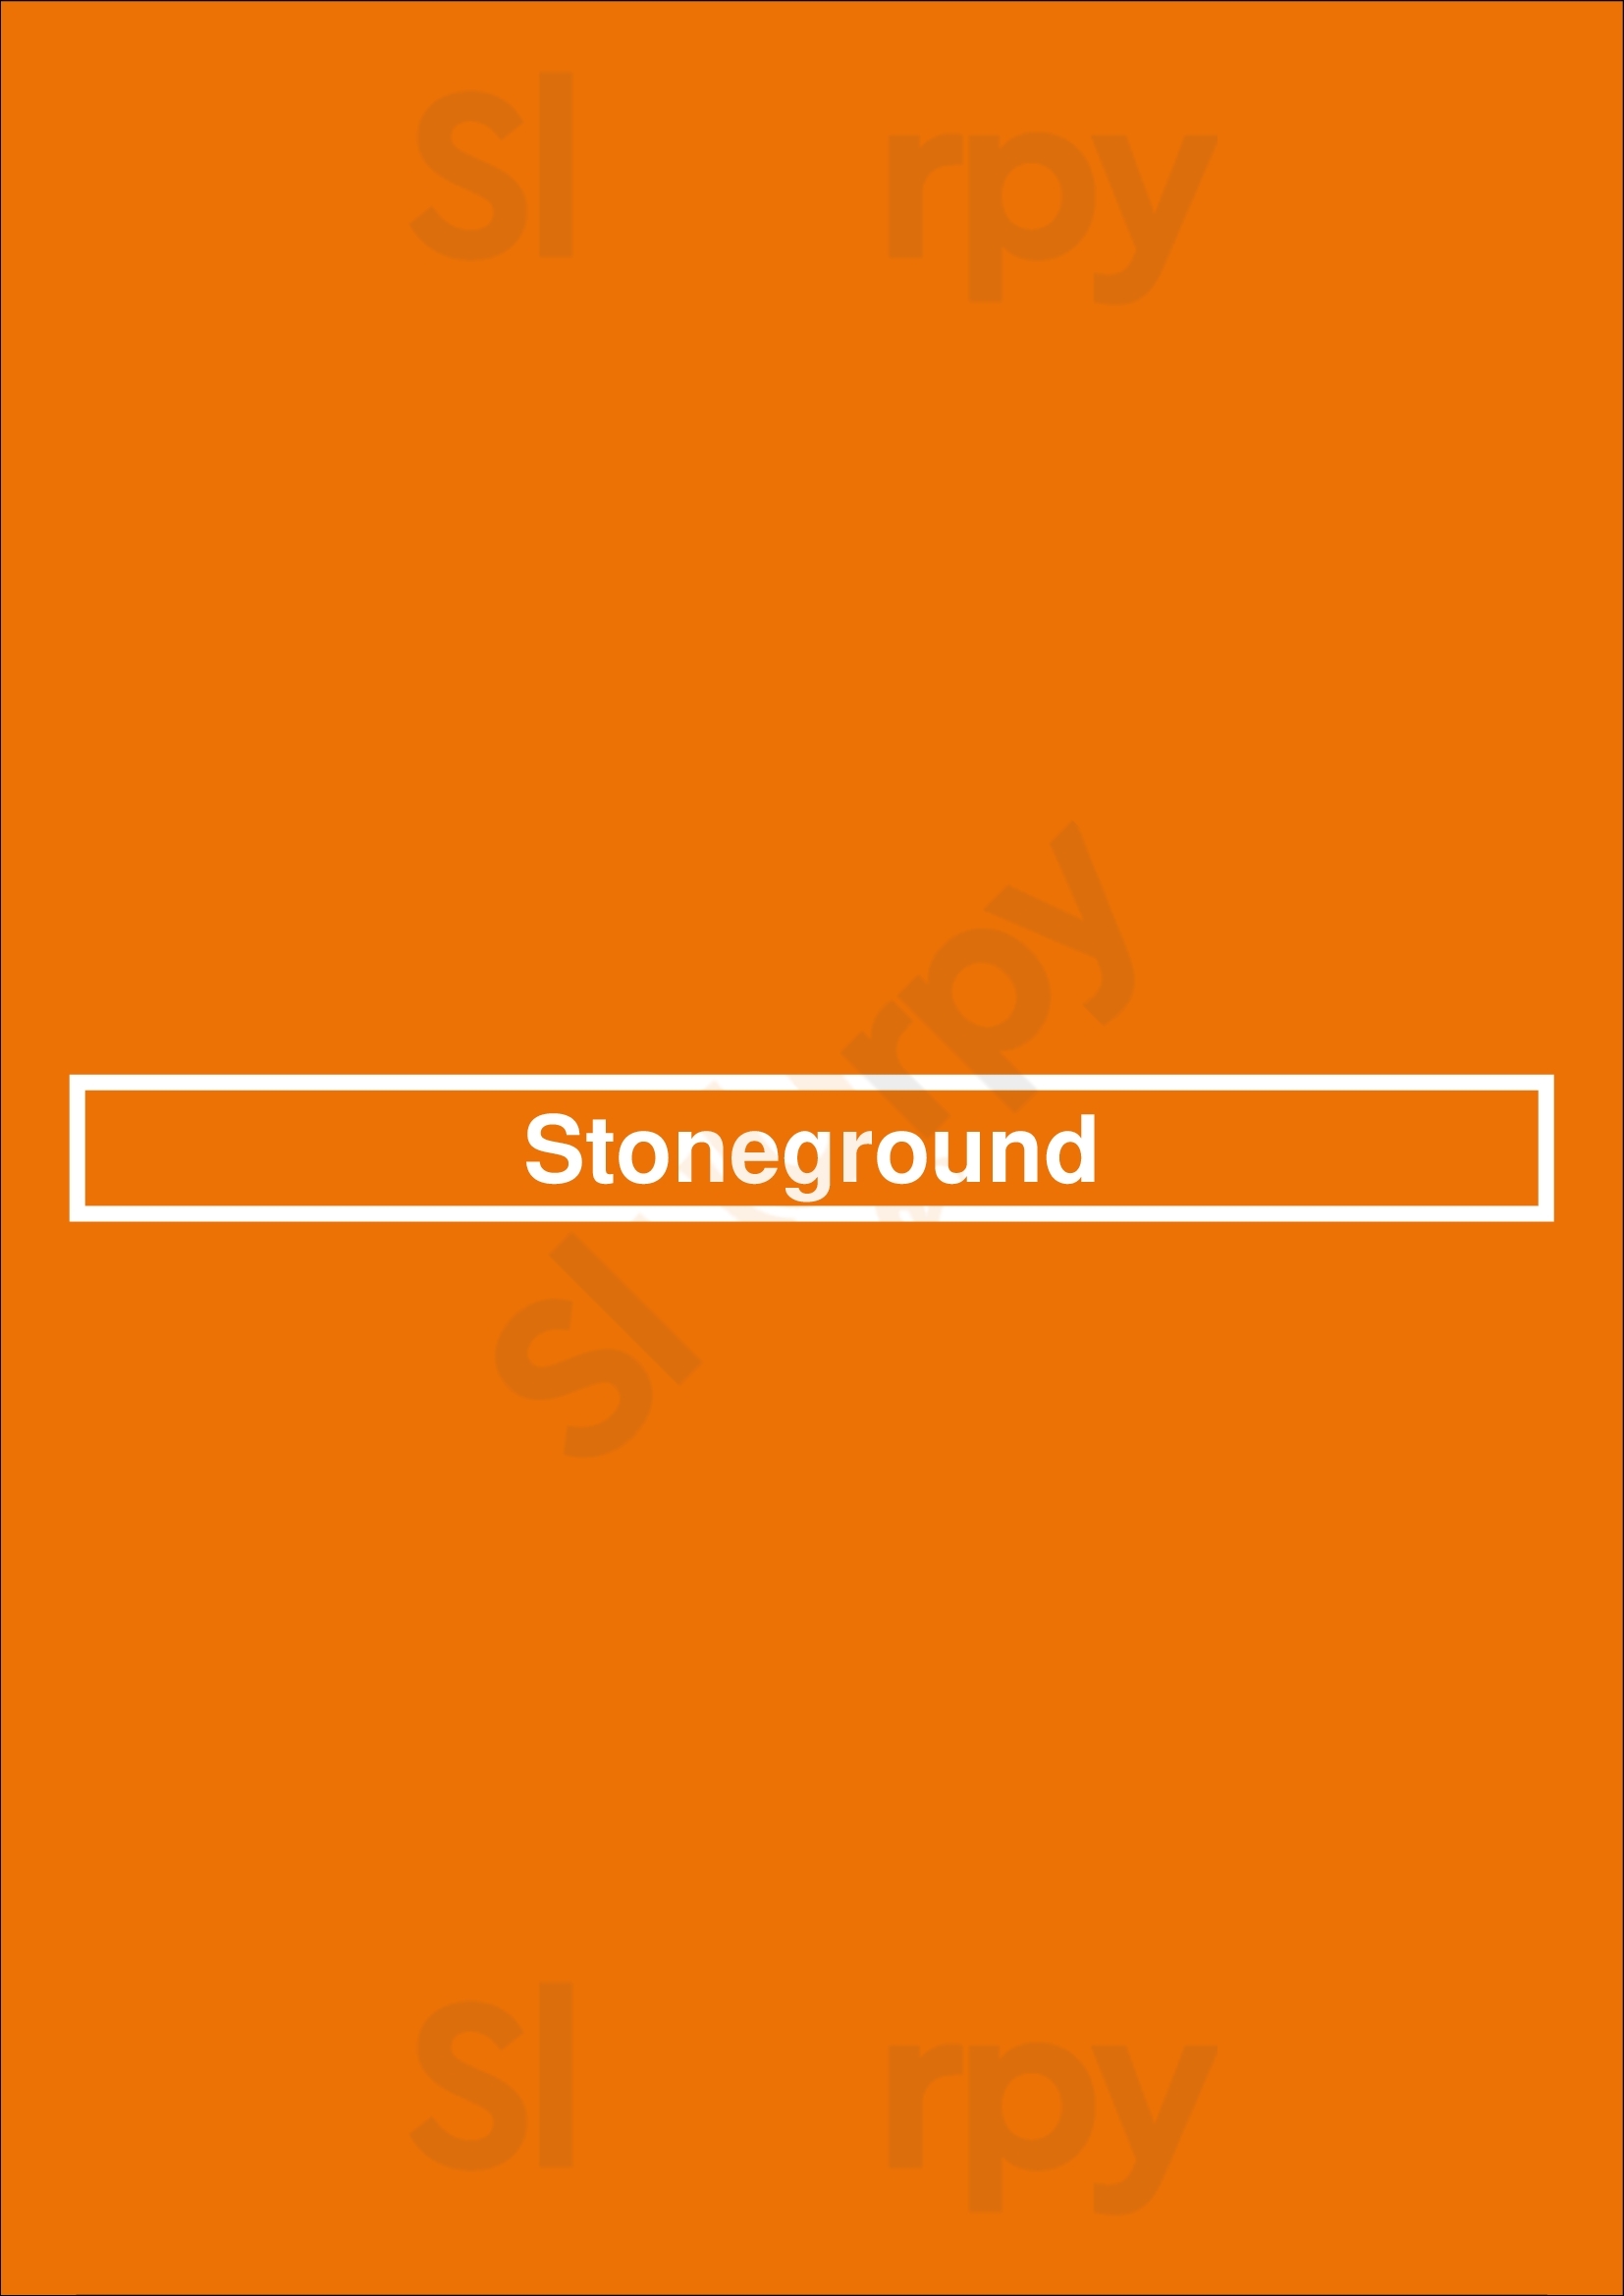 Stoneground Italian Salt Lake City Menu - 1